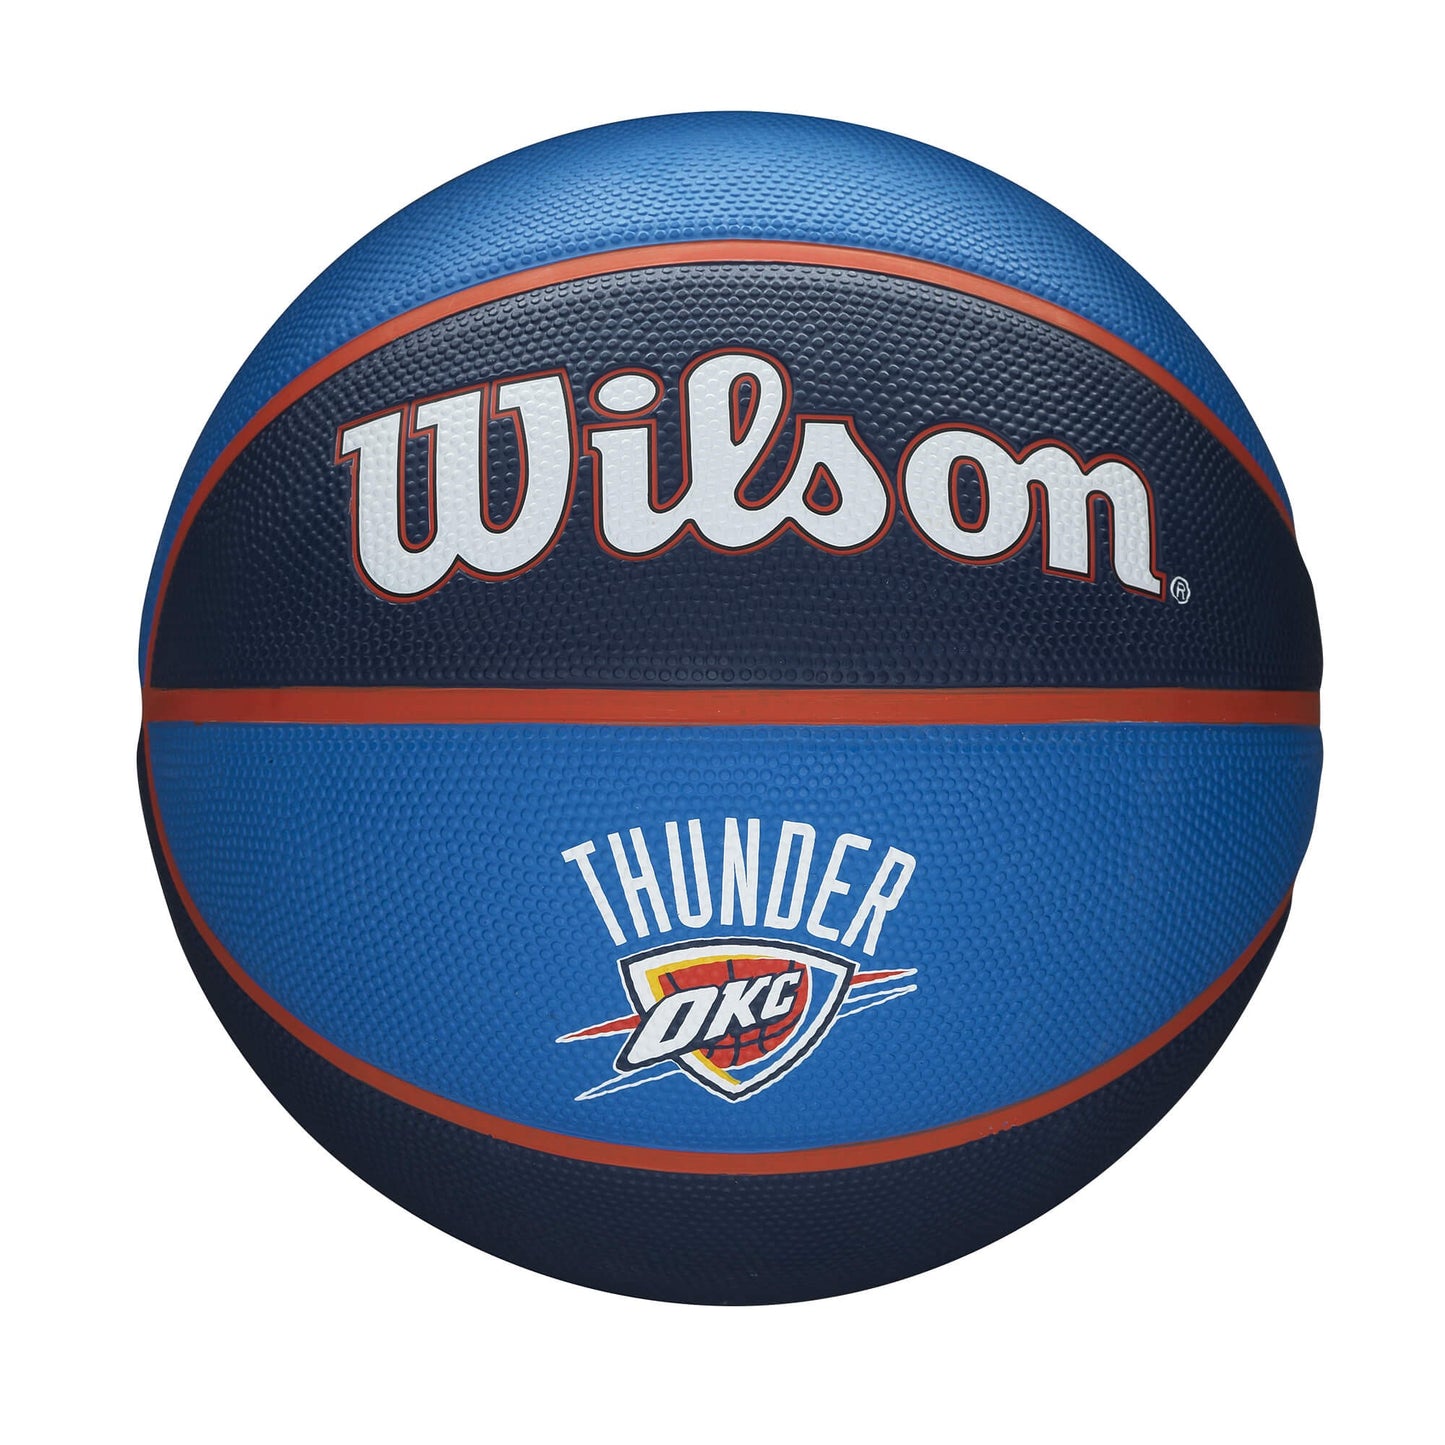 Wilson NBA Team Tribute Basketball Oklahoma City Thunder (sz. 7)